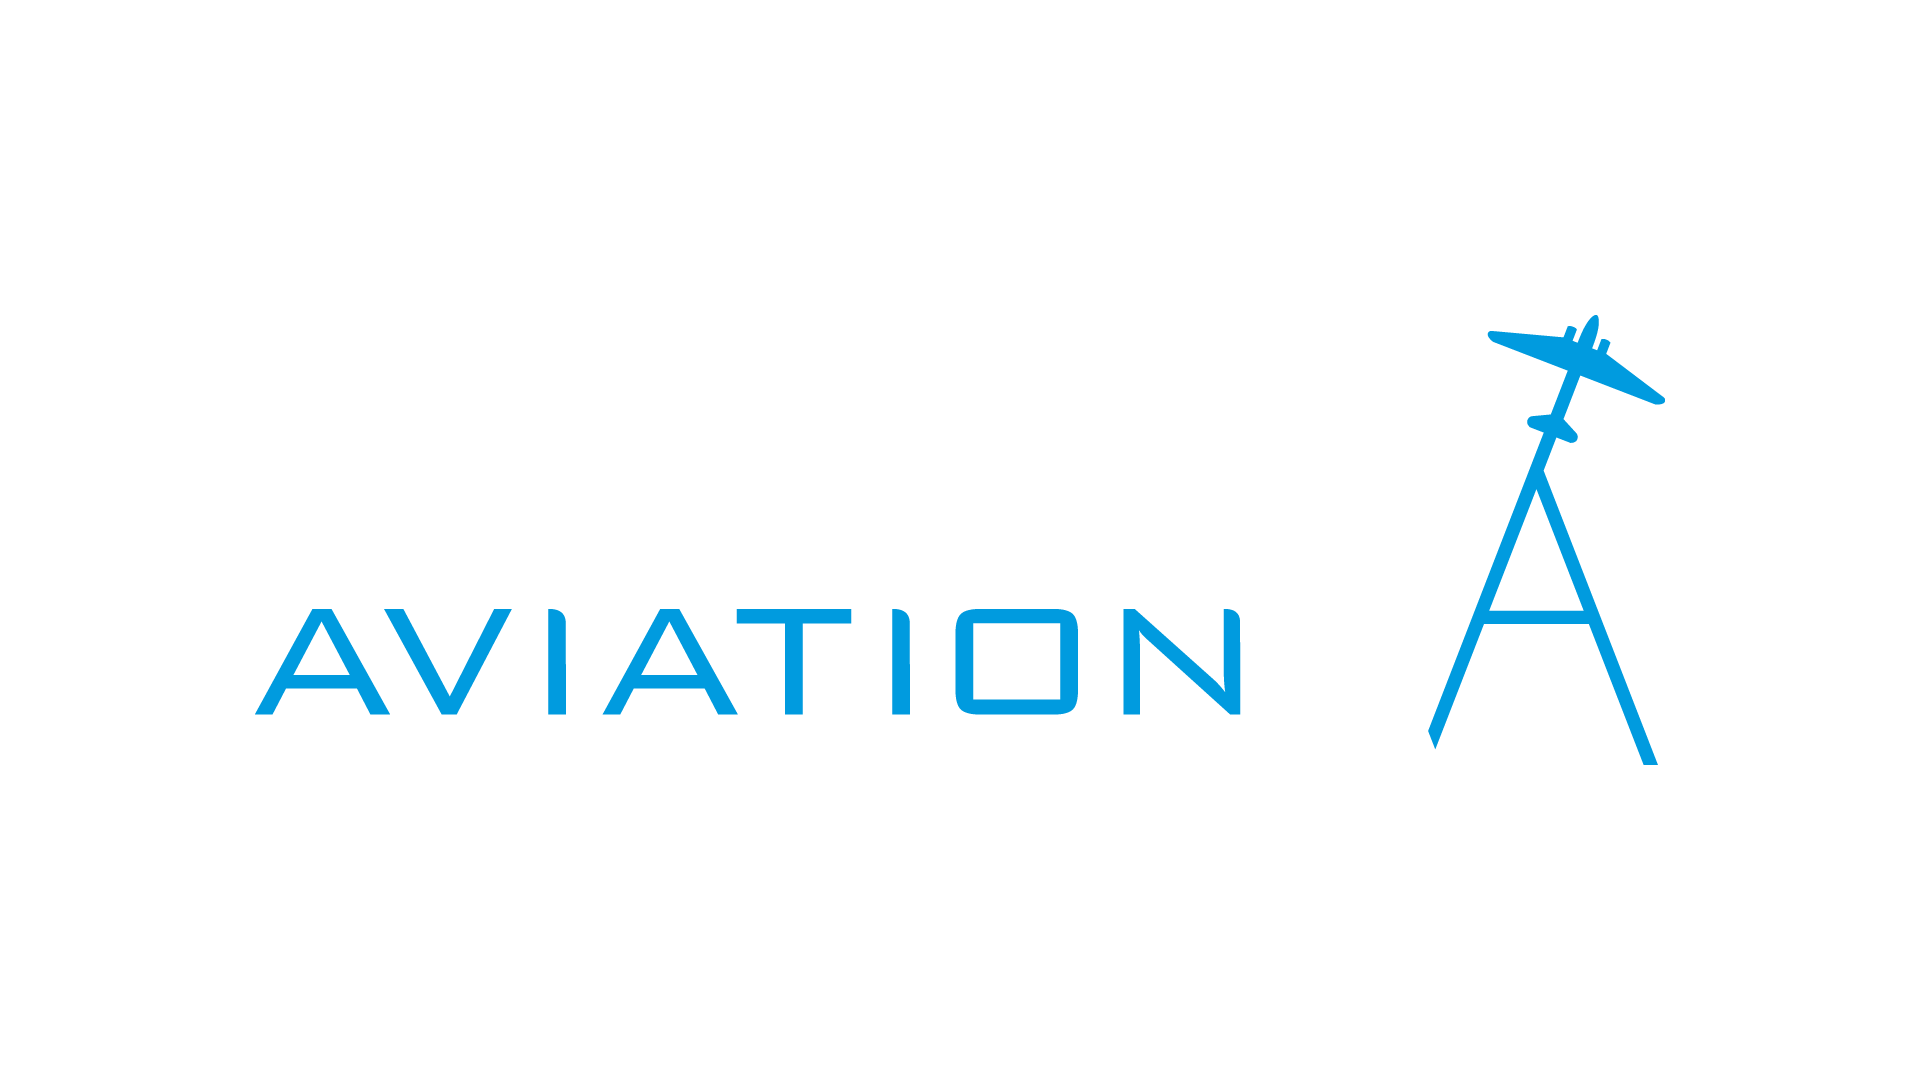 Vaerus Aviation